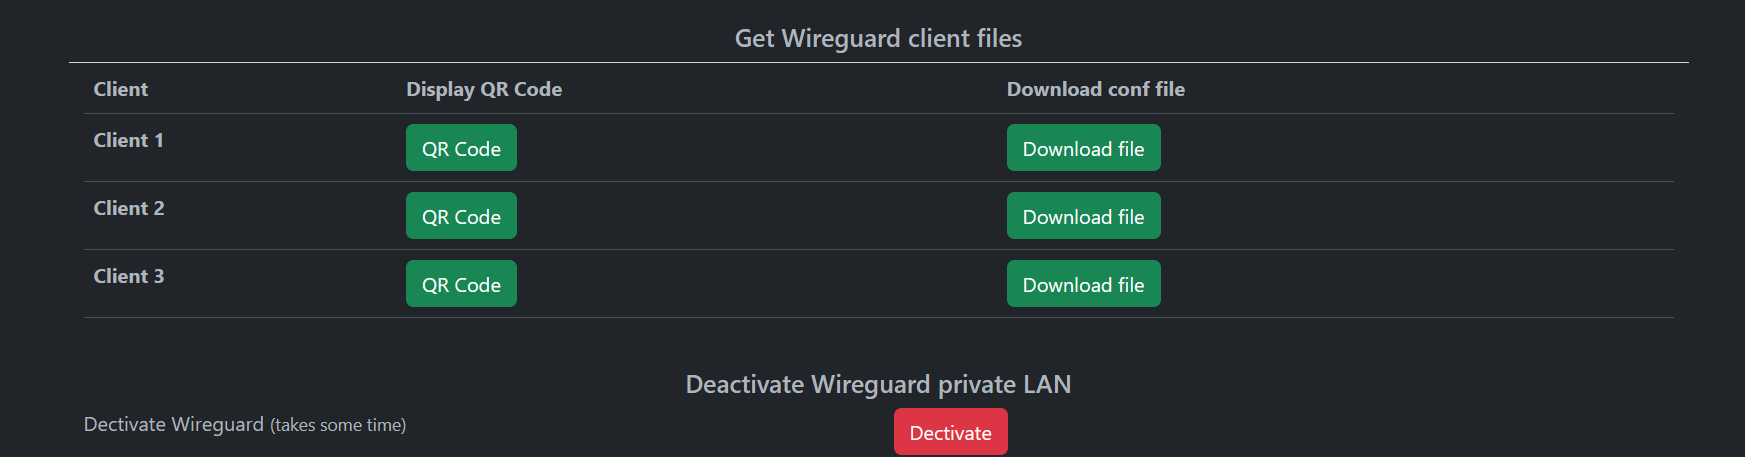 webui_wireguard_clients.png